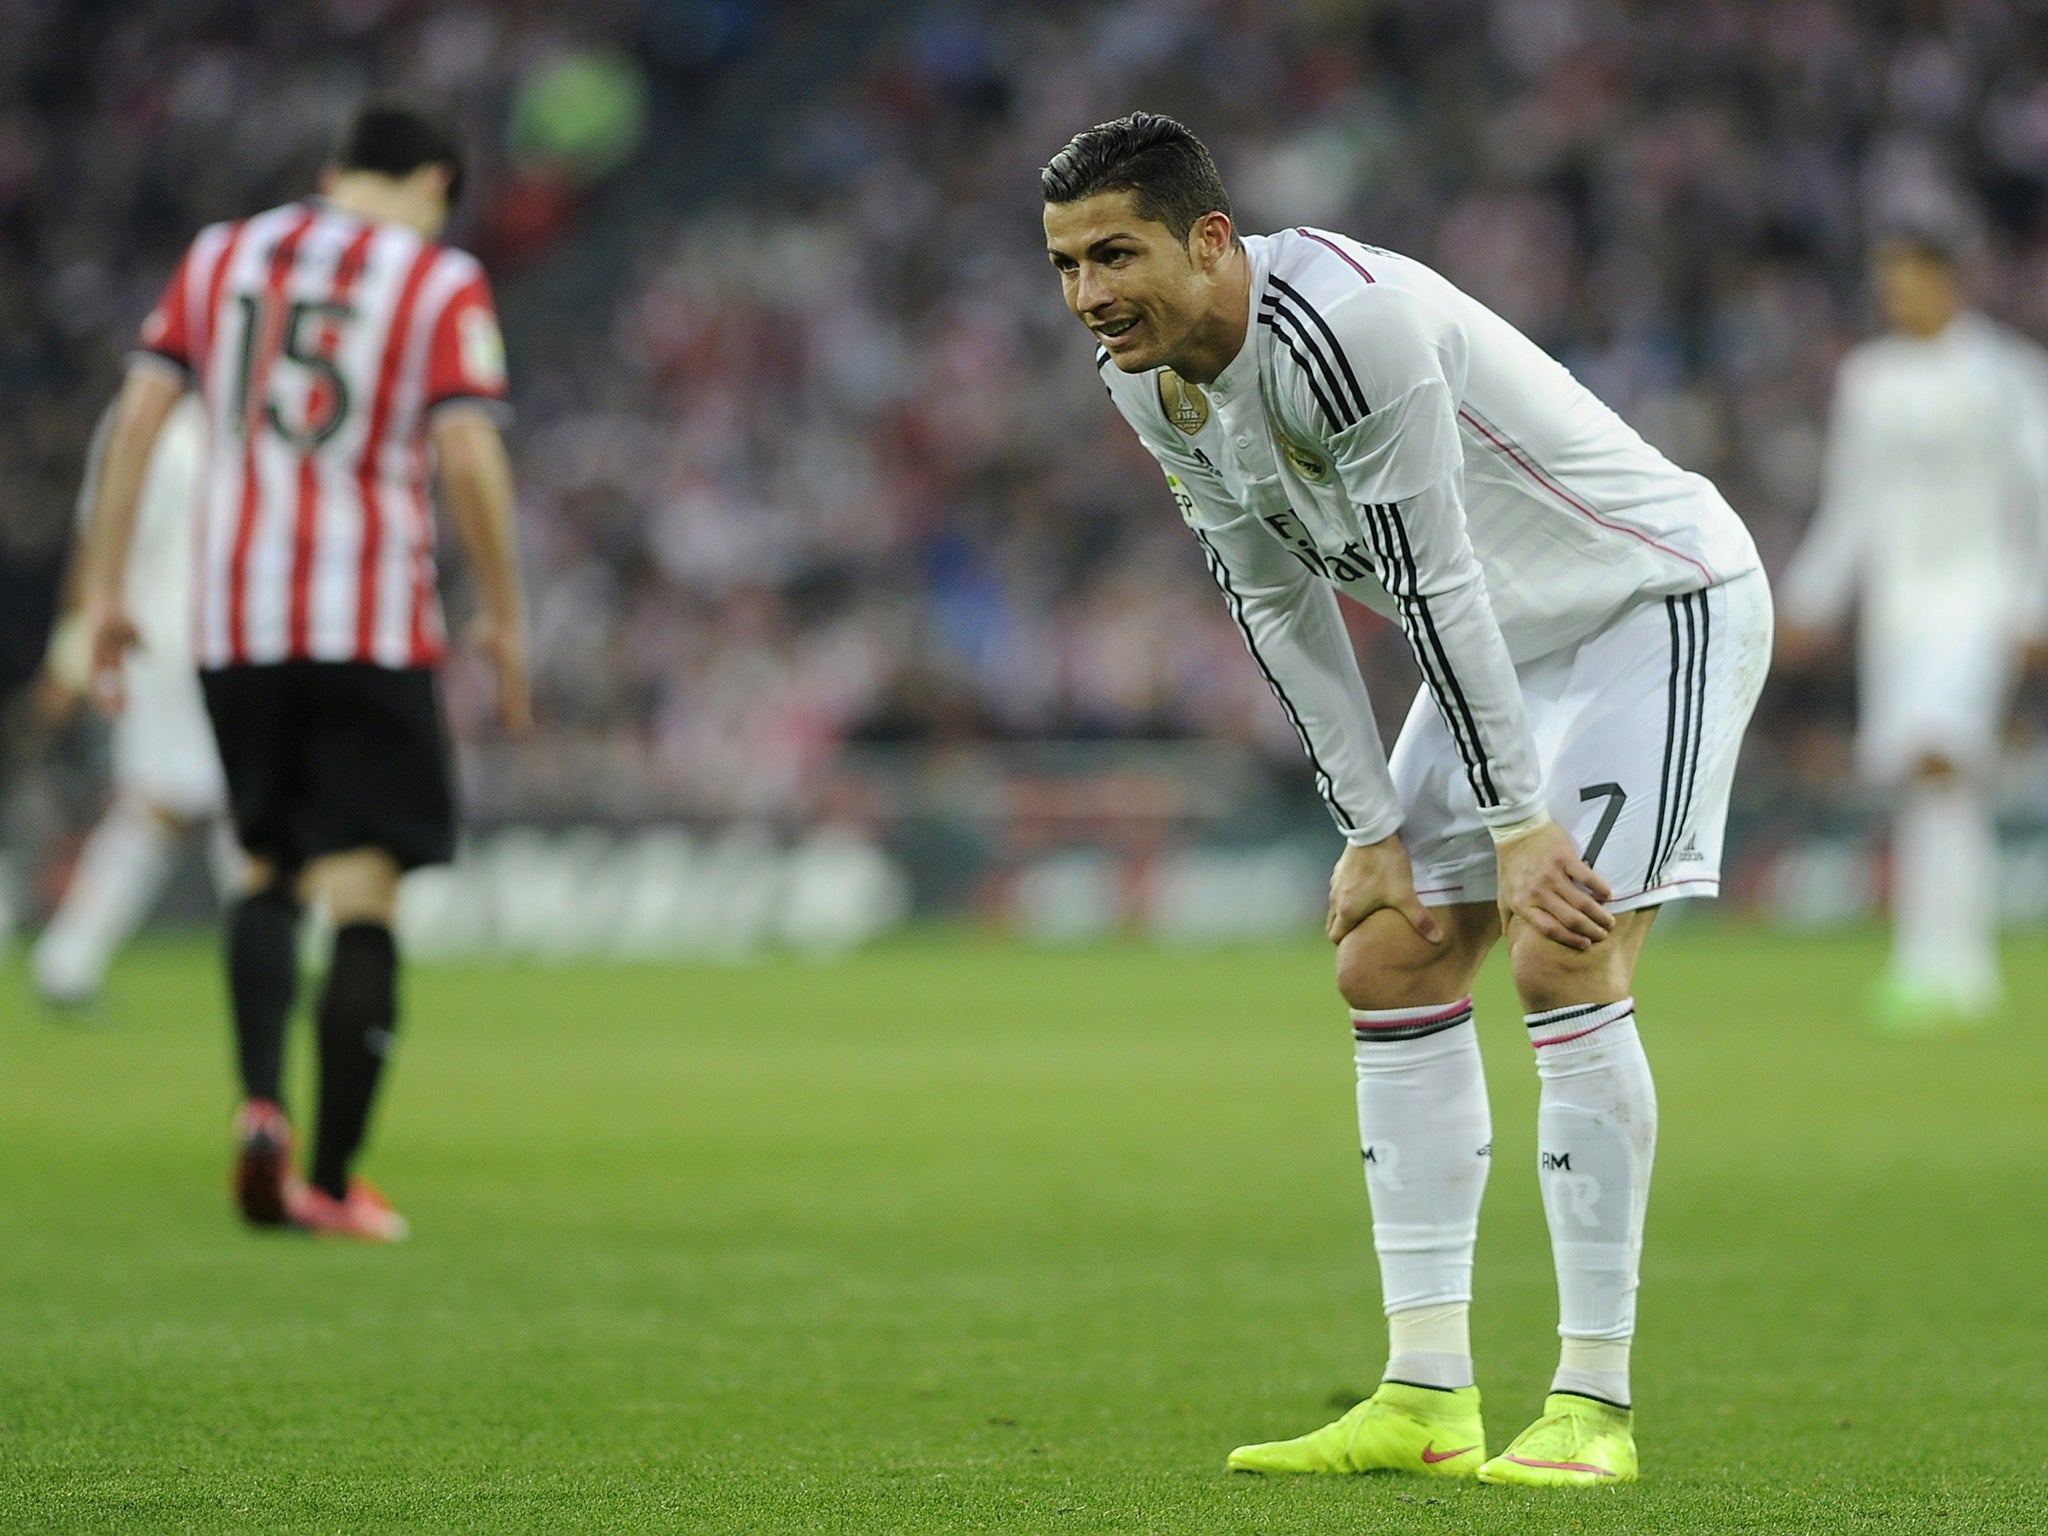 Ronaldo has struggled recently after a ferocious start